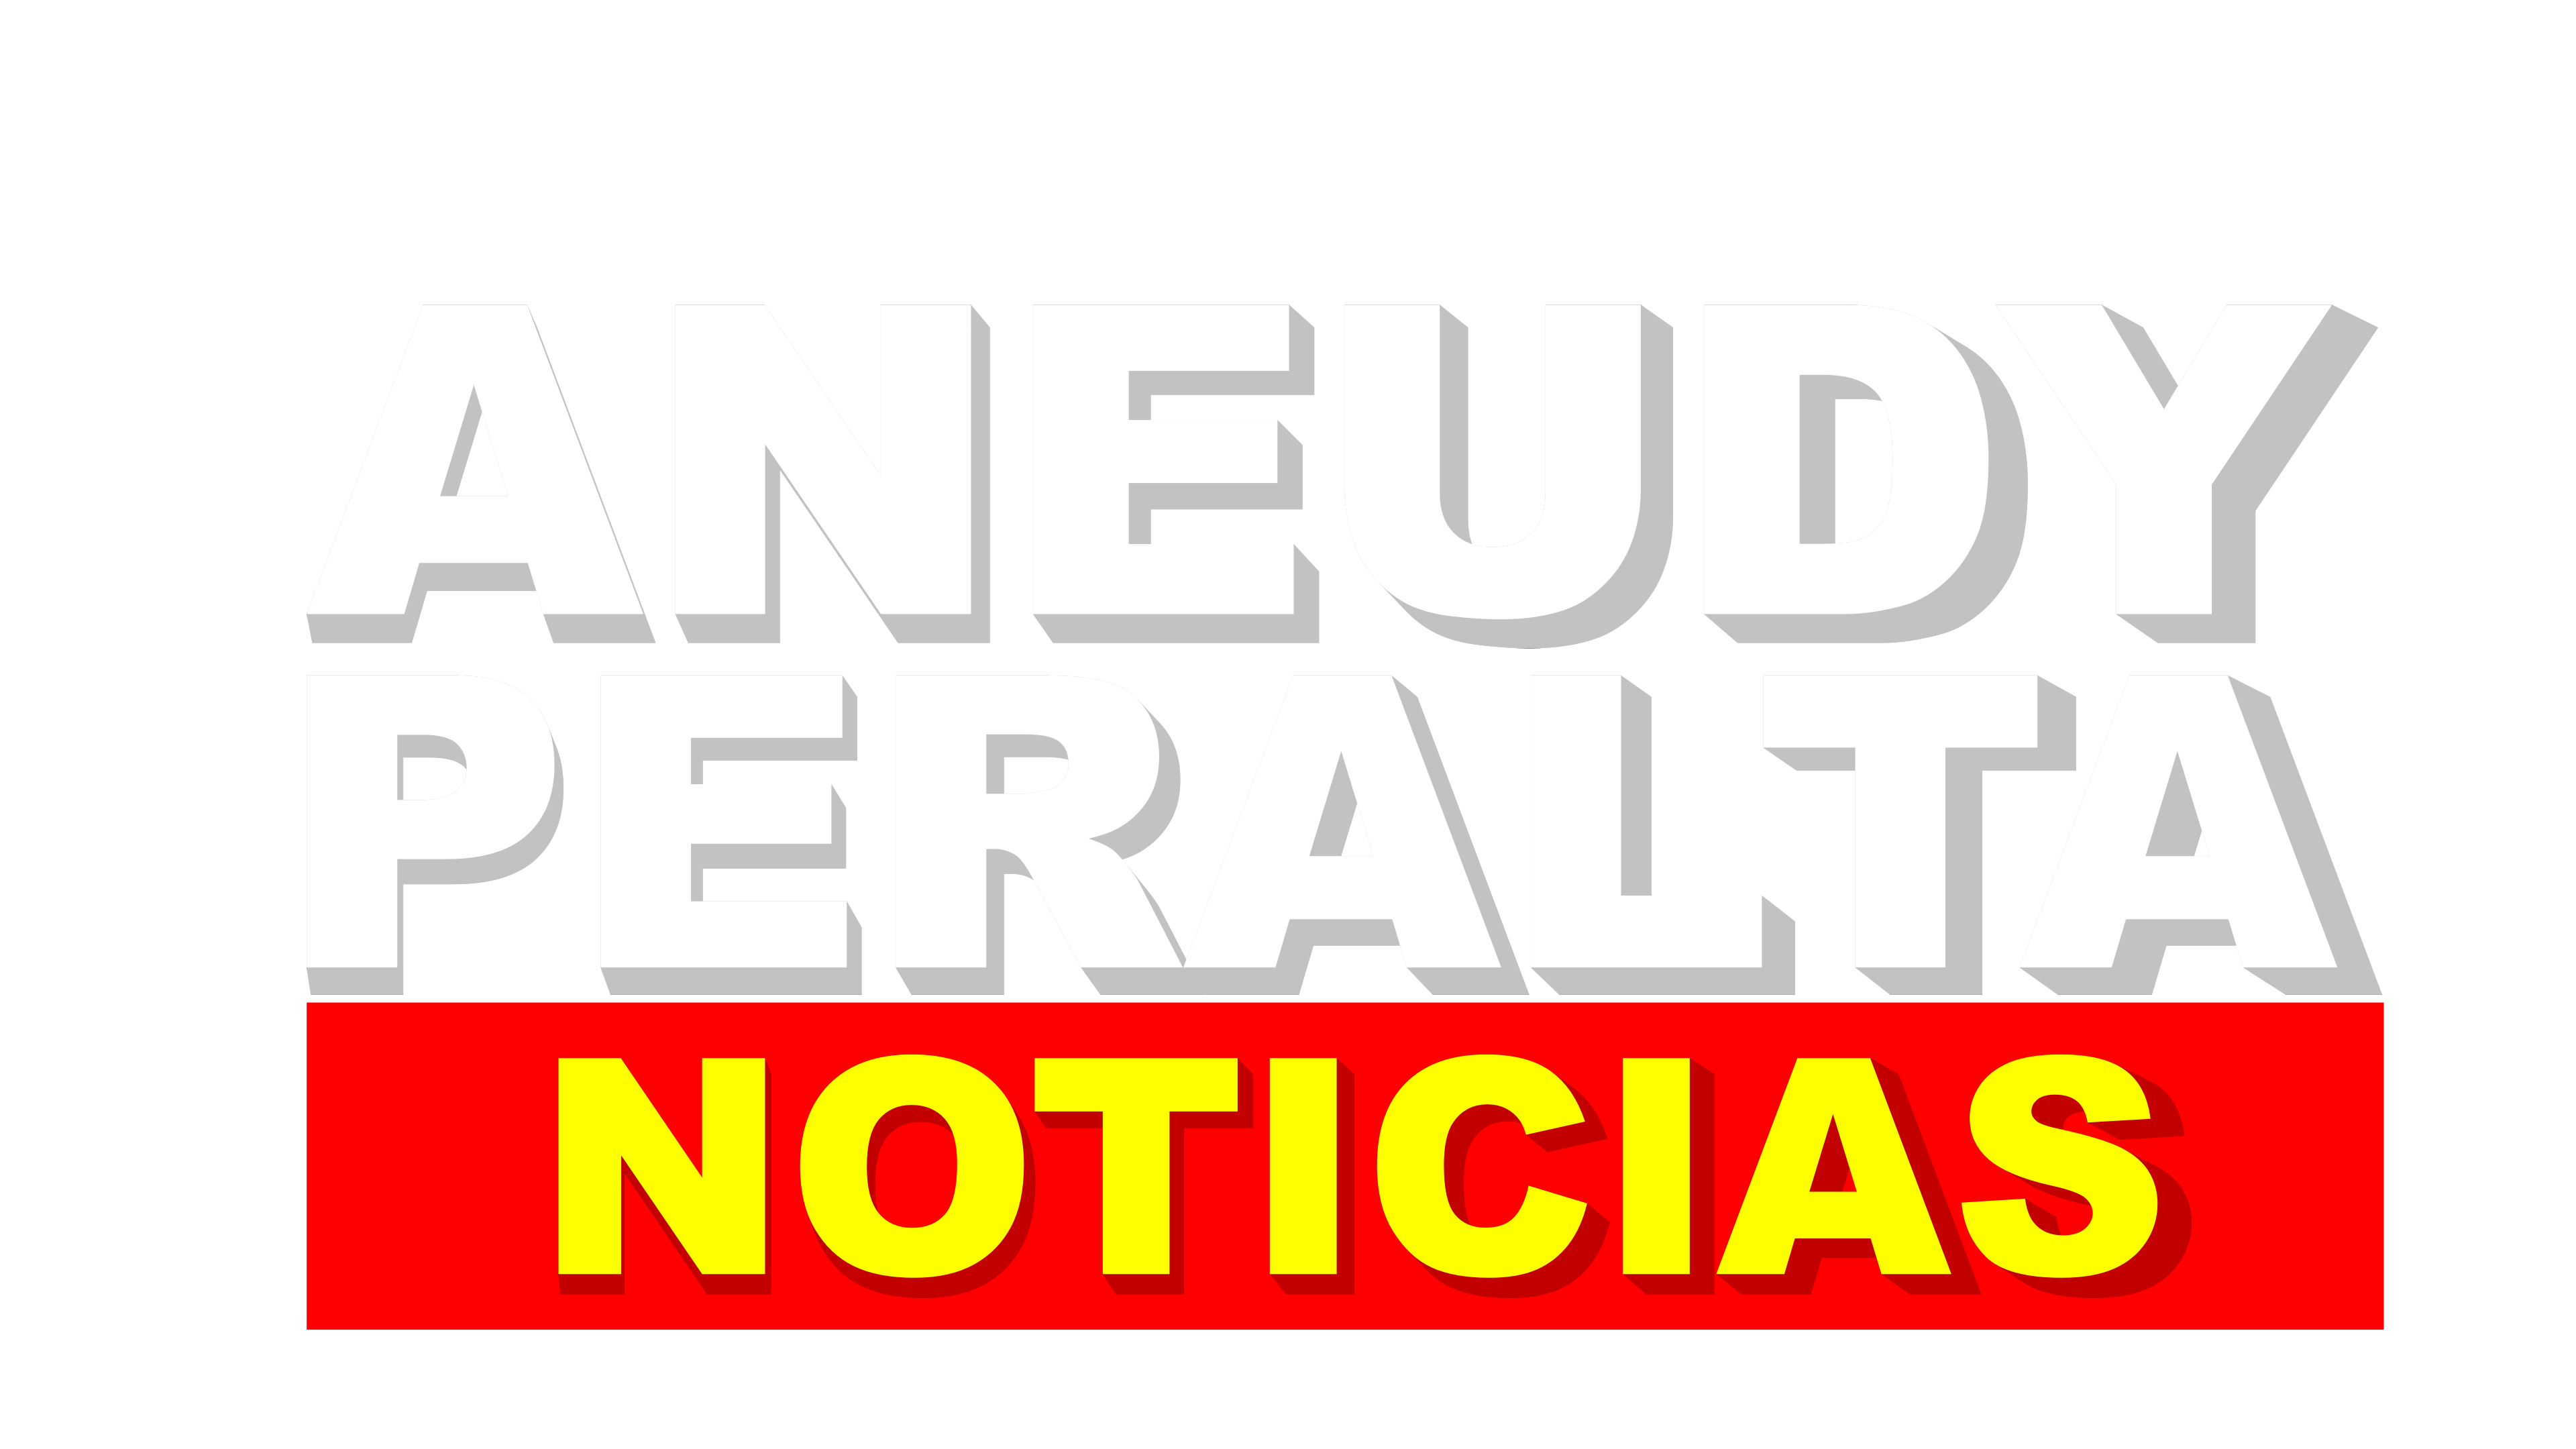 Aneudy Peralta Noticias